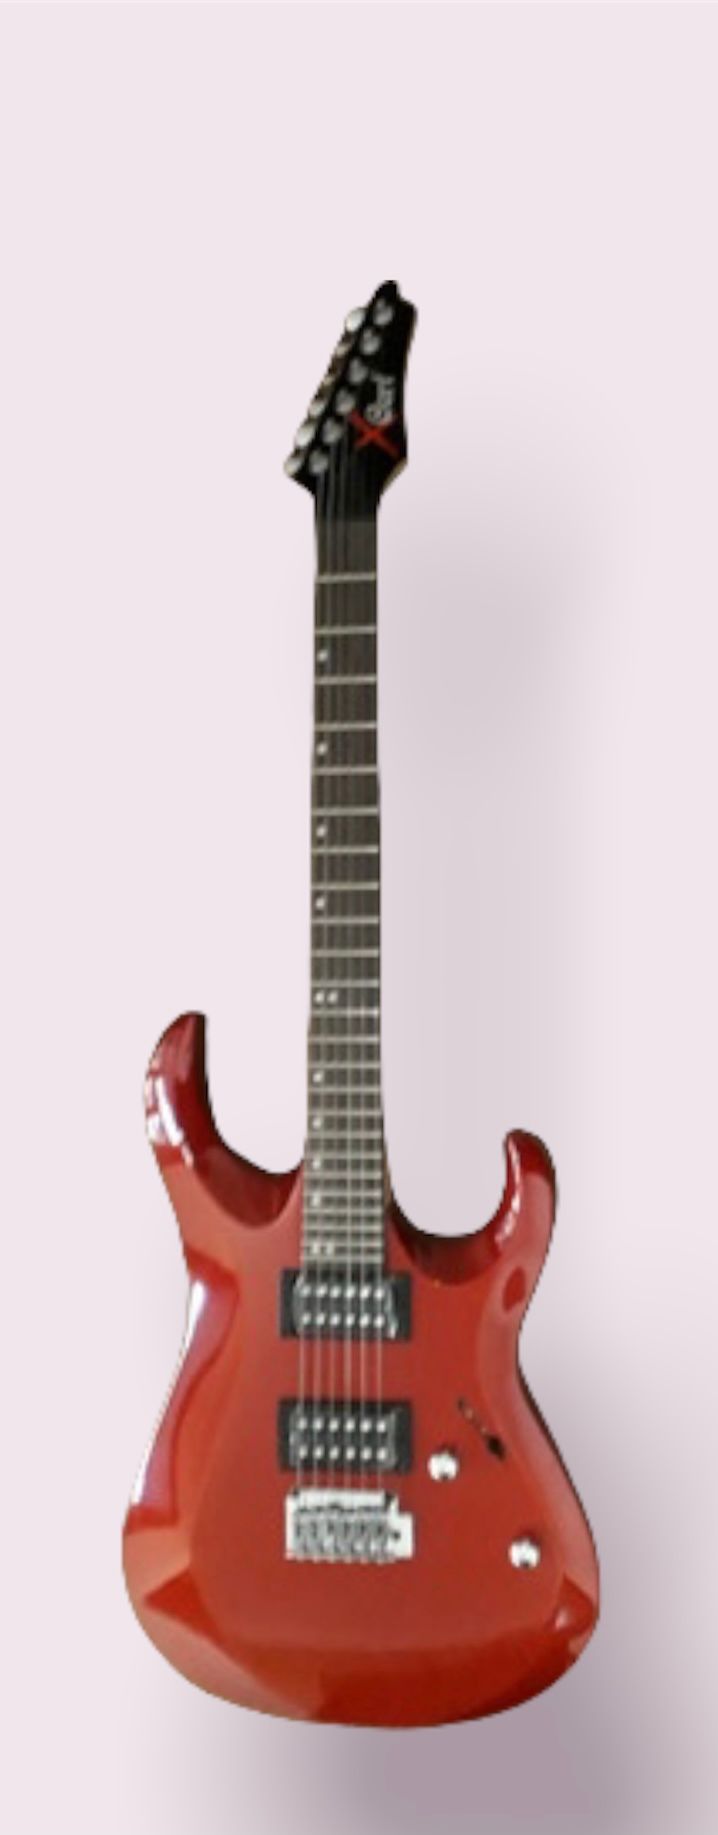 Null 
* 电吉他，Cort X-2

金属红色，编号070120385，印度尼西亚制造

薄利多销

在其Cort箱中